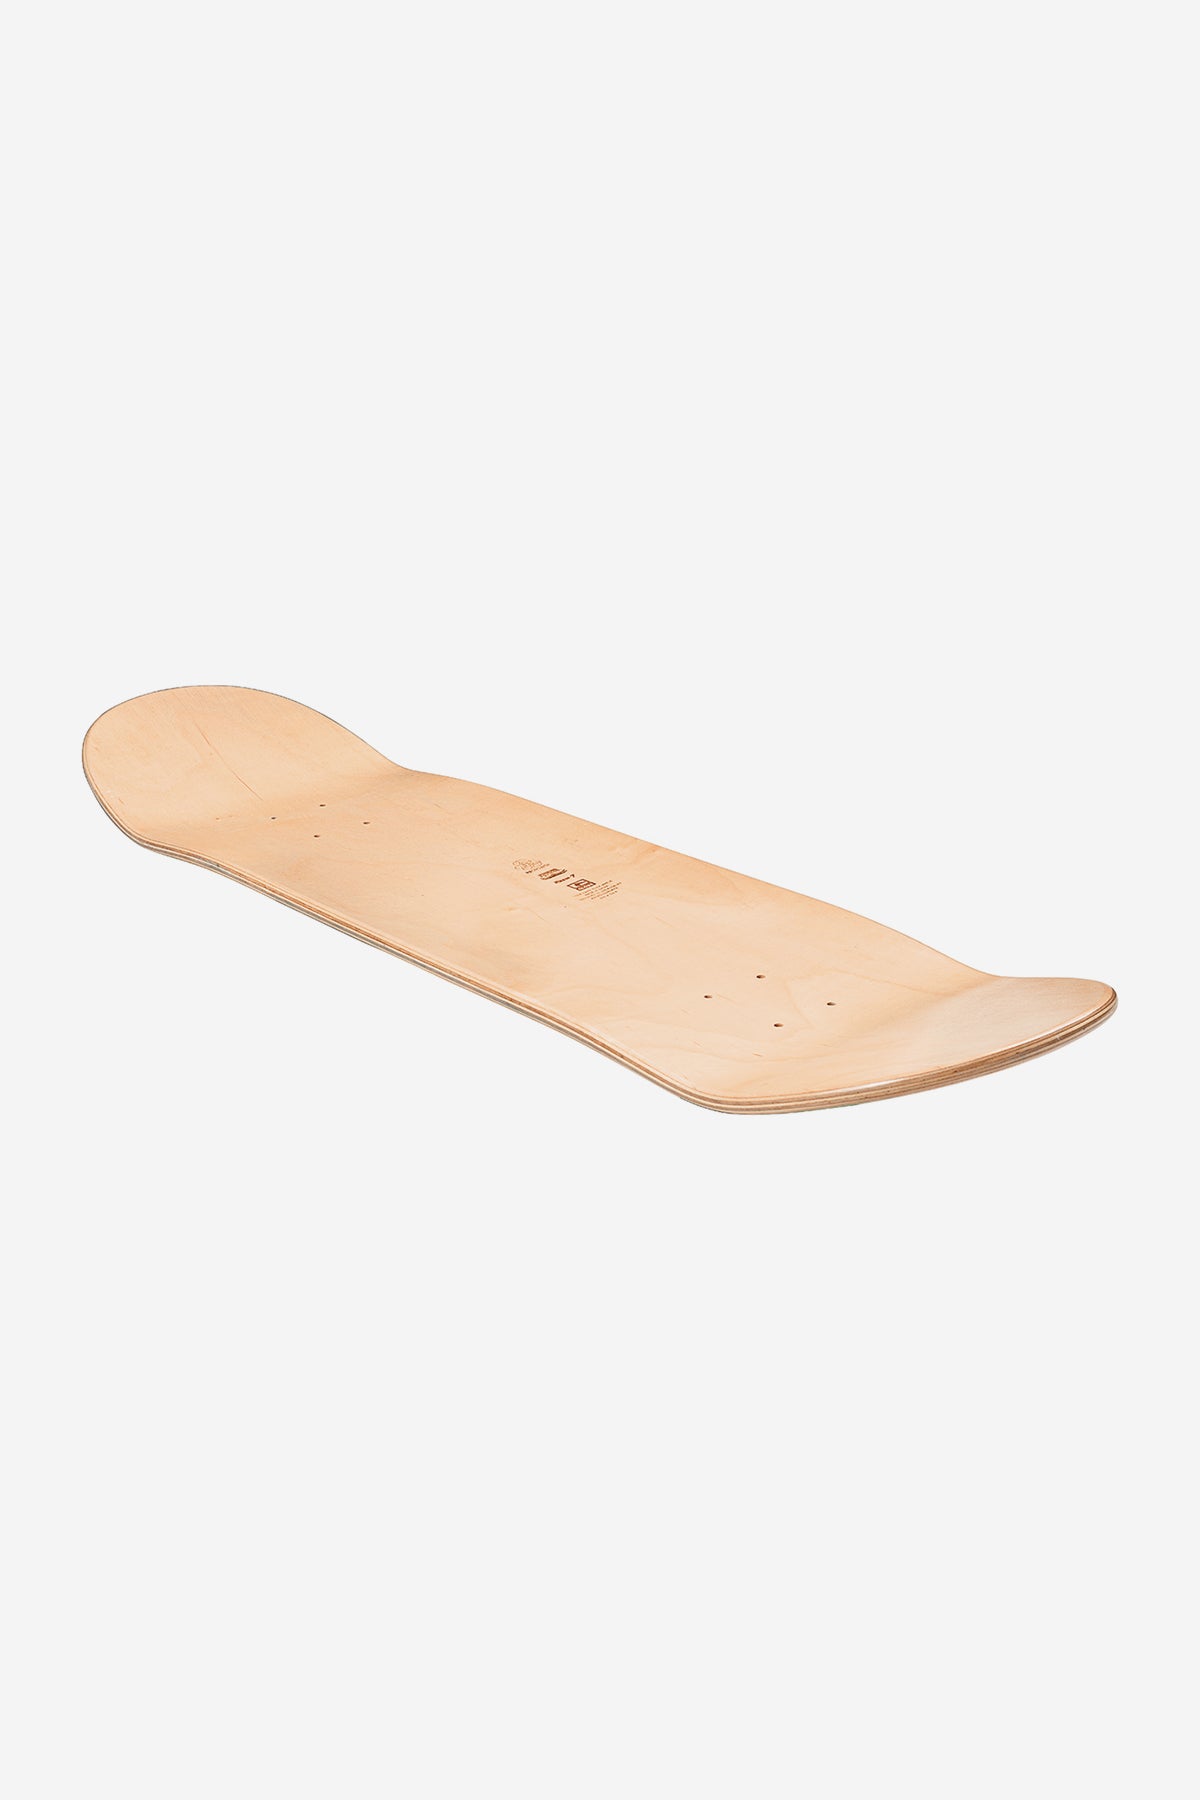 Goodstock - Clay - 8.5" Skateboard Deck